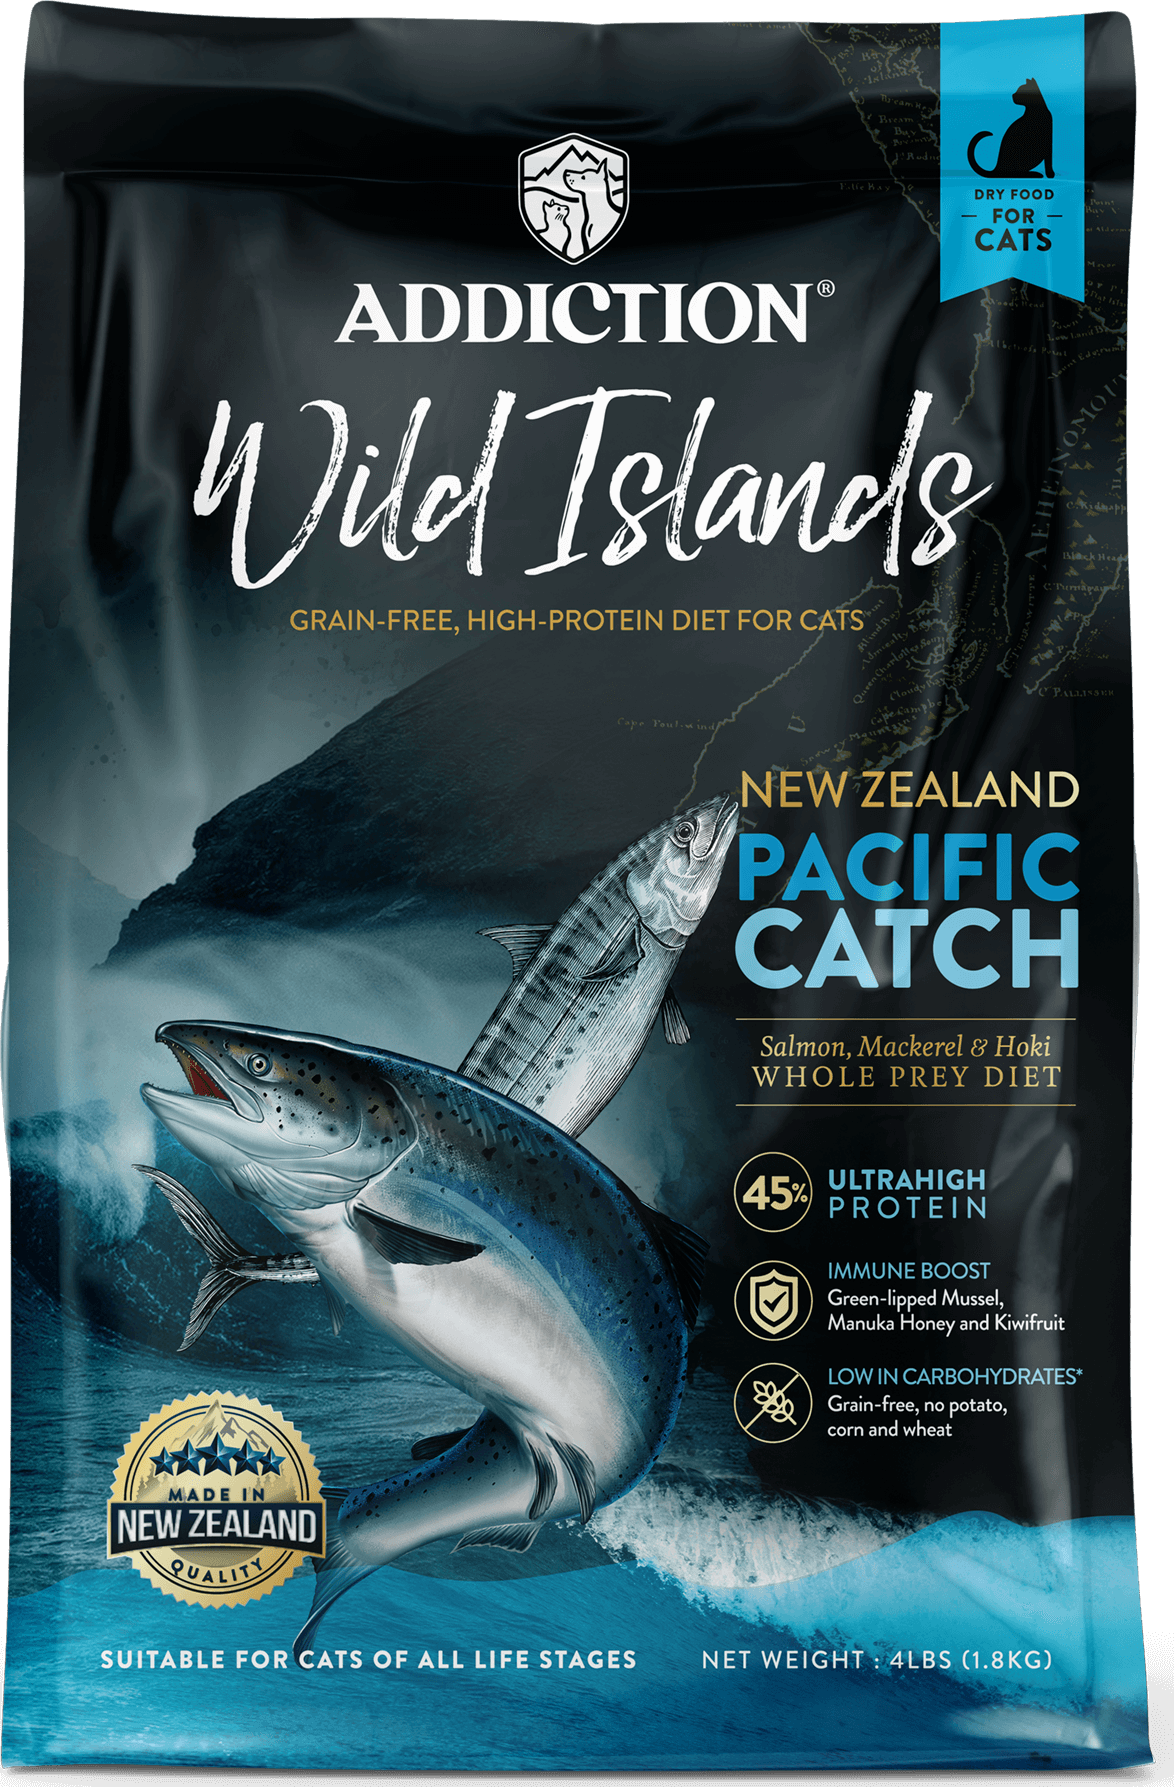 Addiction Wild Islands Pacific Catch